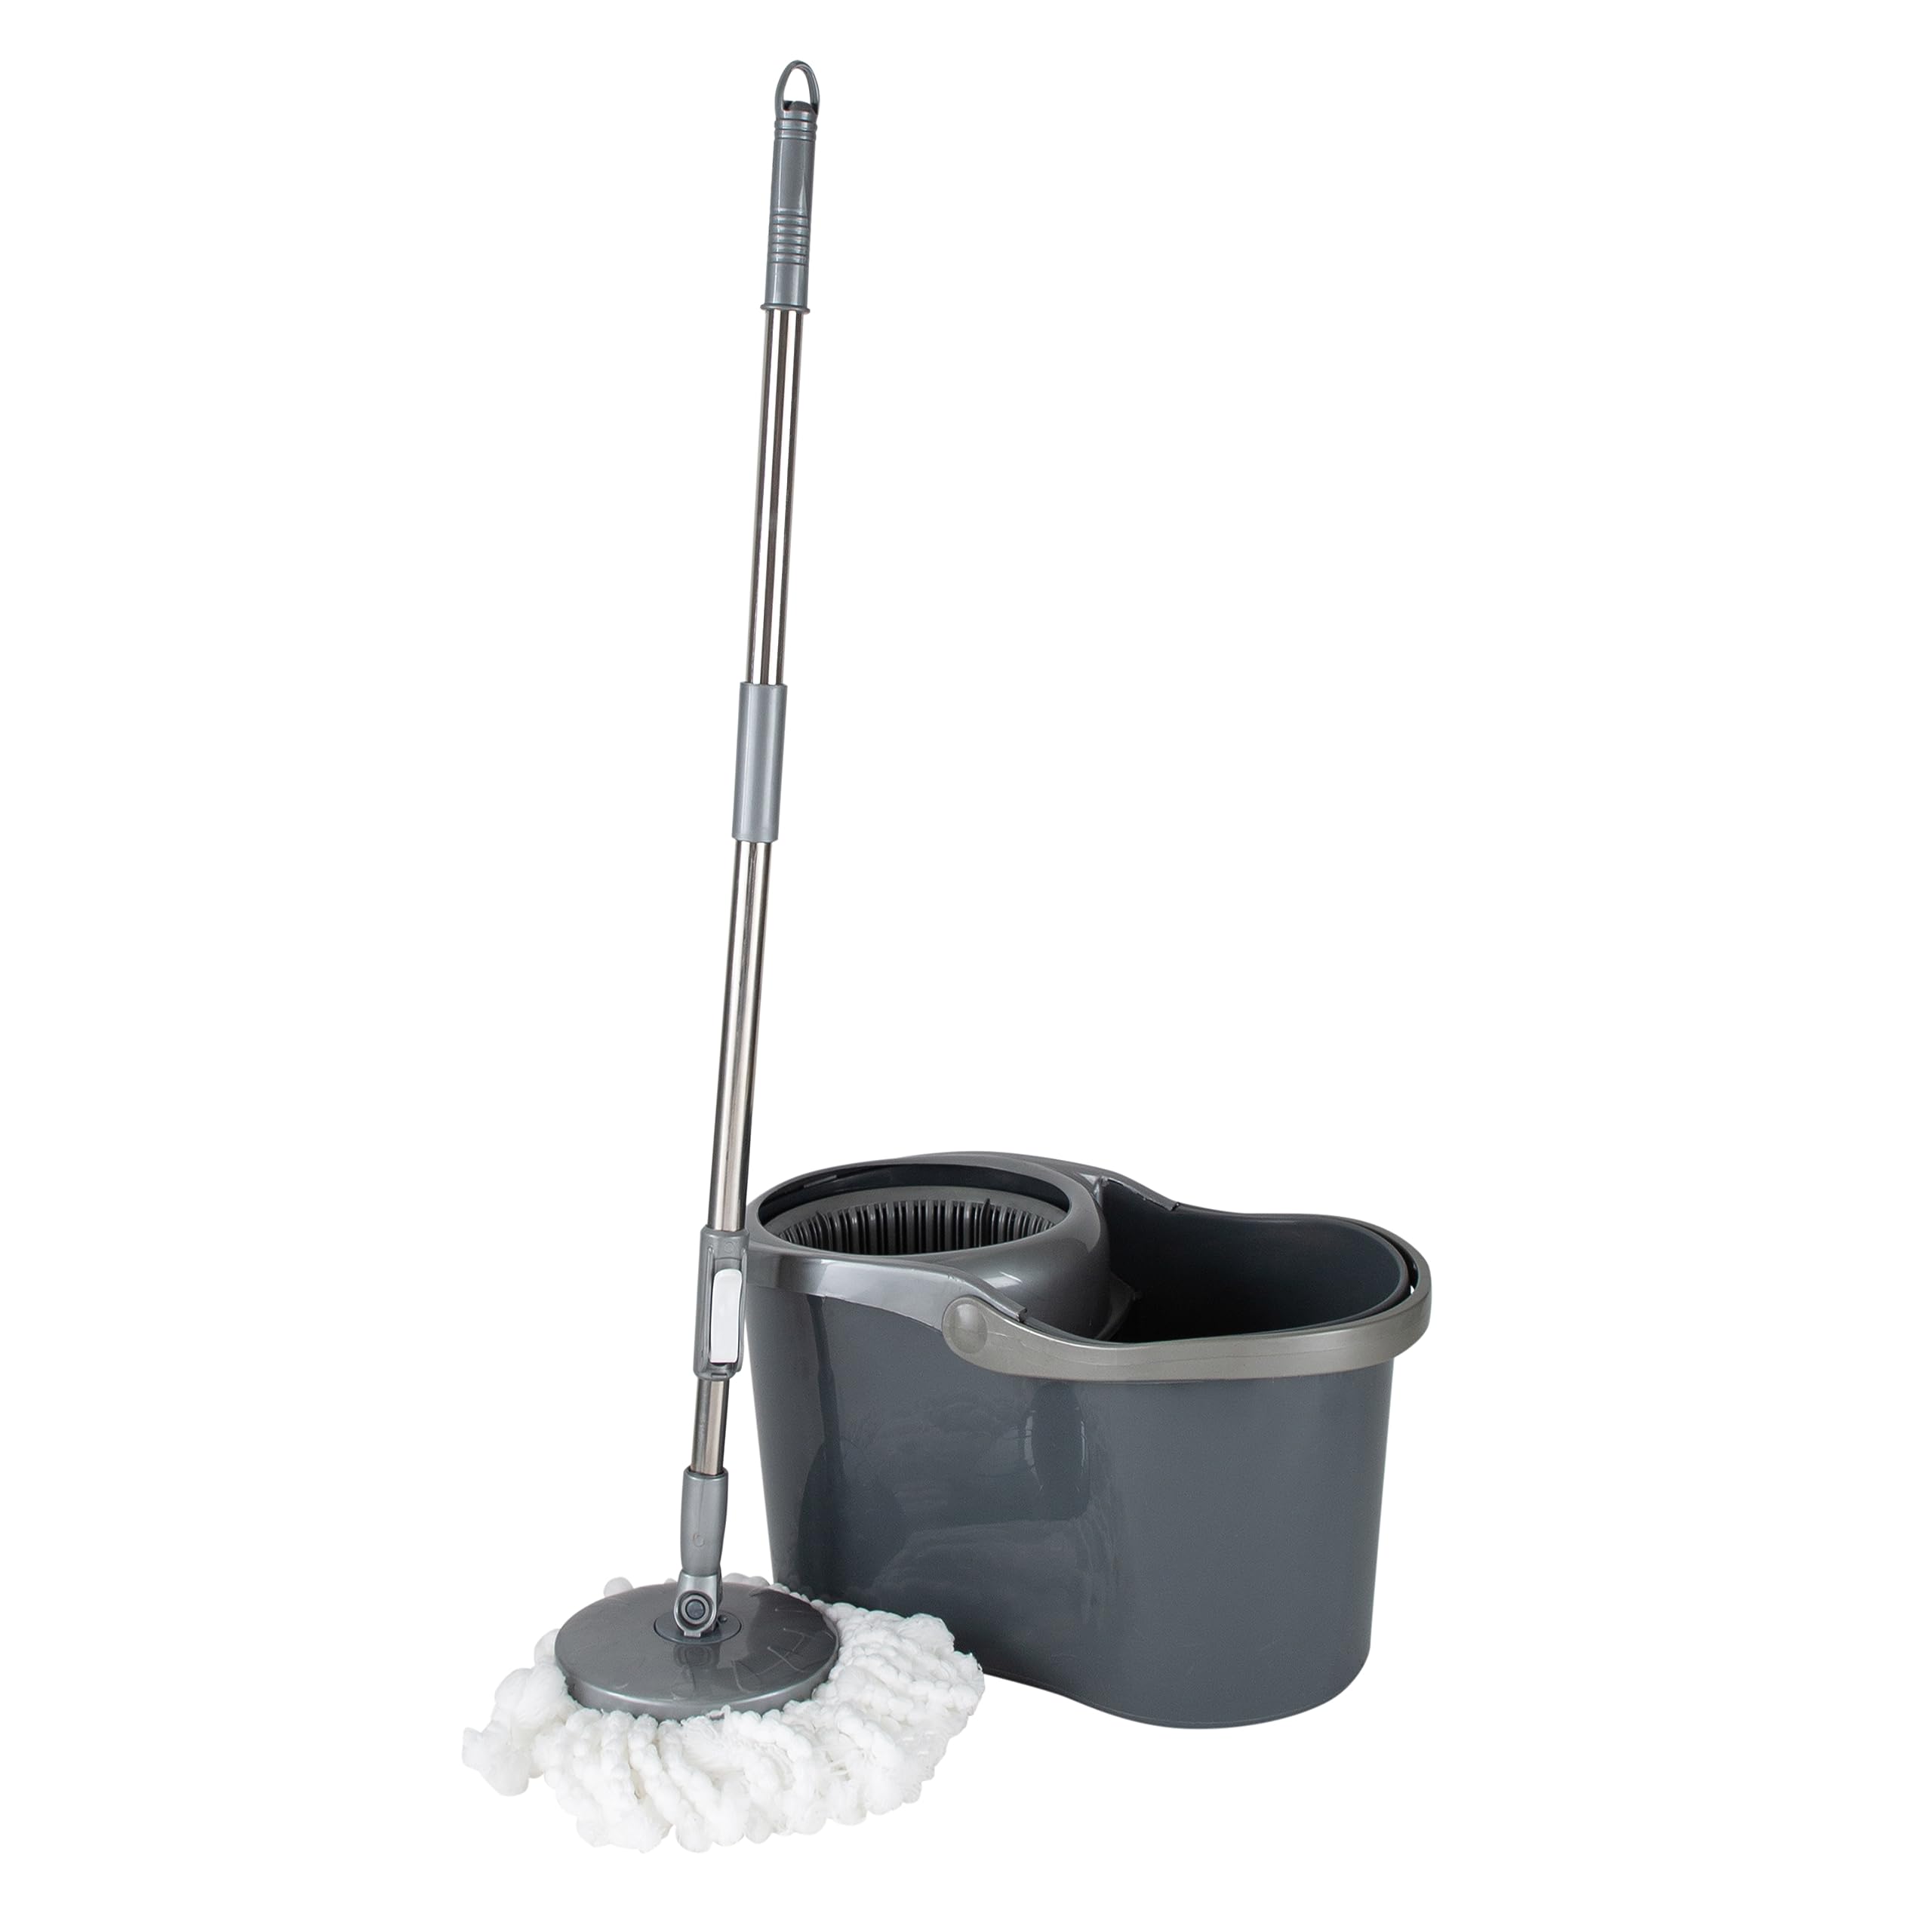 Simplify Self Wringing Mop & Bucket Set, 16 Liter, Grey